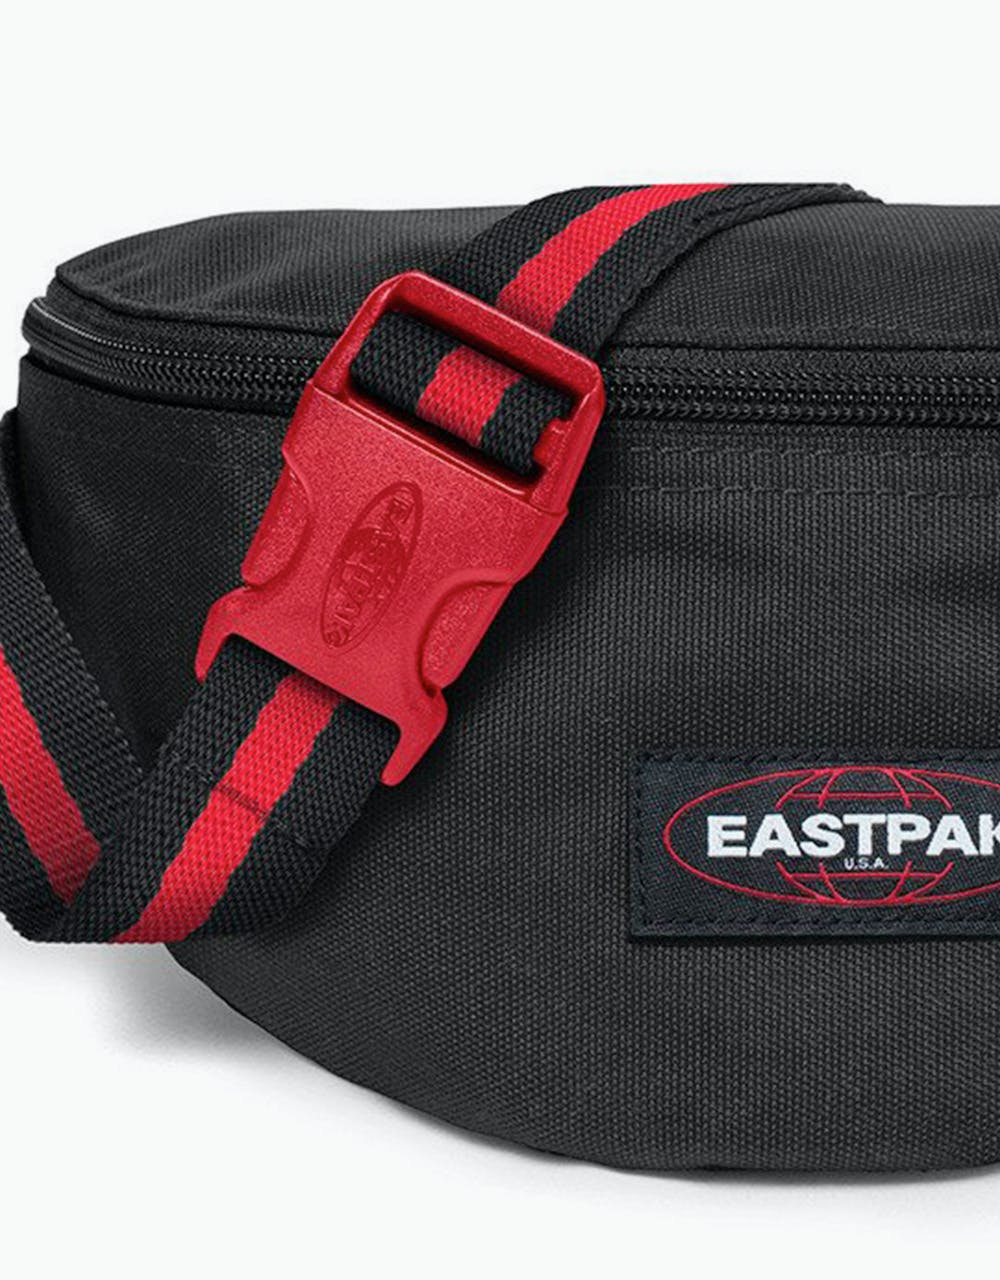 Eastpak Springer Cross Body Bag - Blackout Sailor